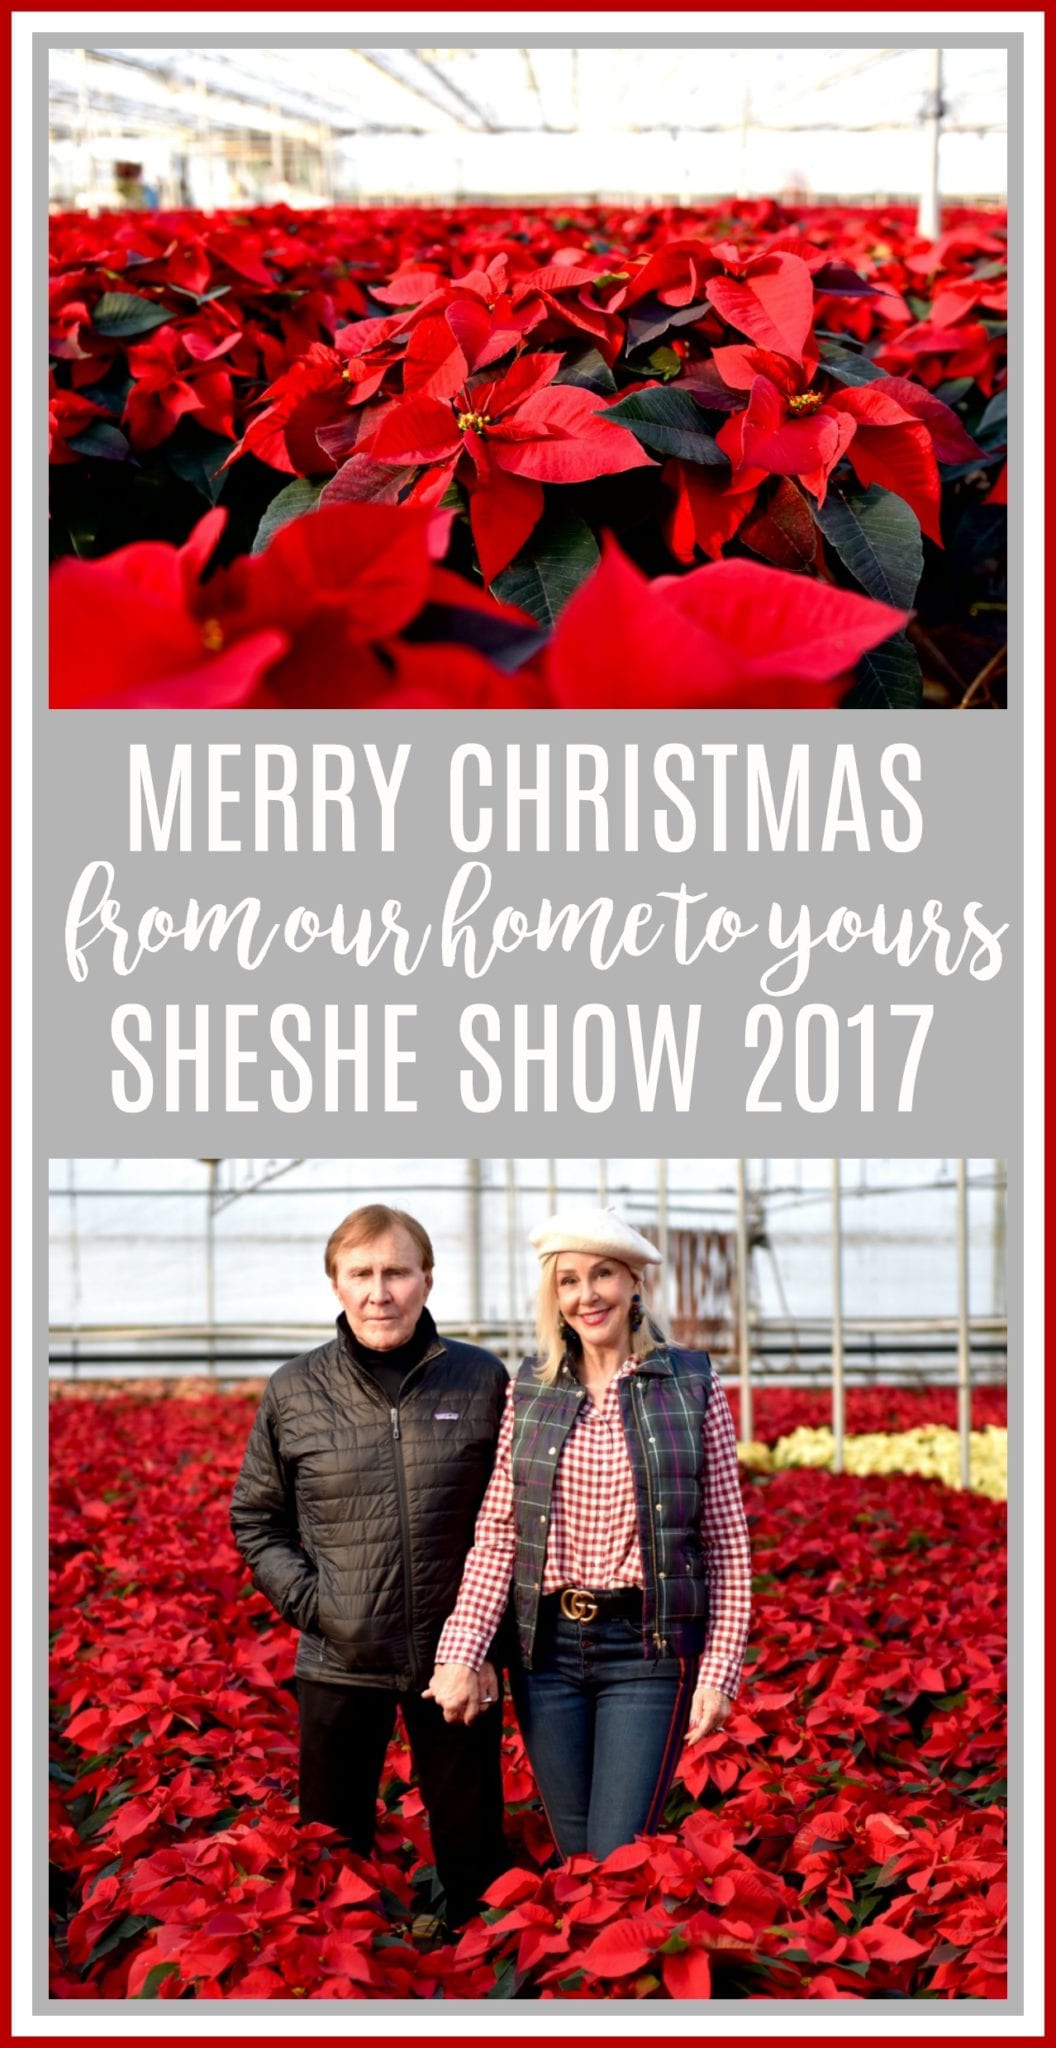 sheshe show, christmas, holiday, frede, 